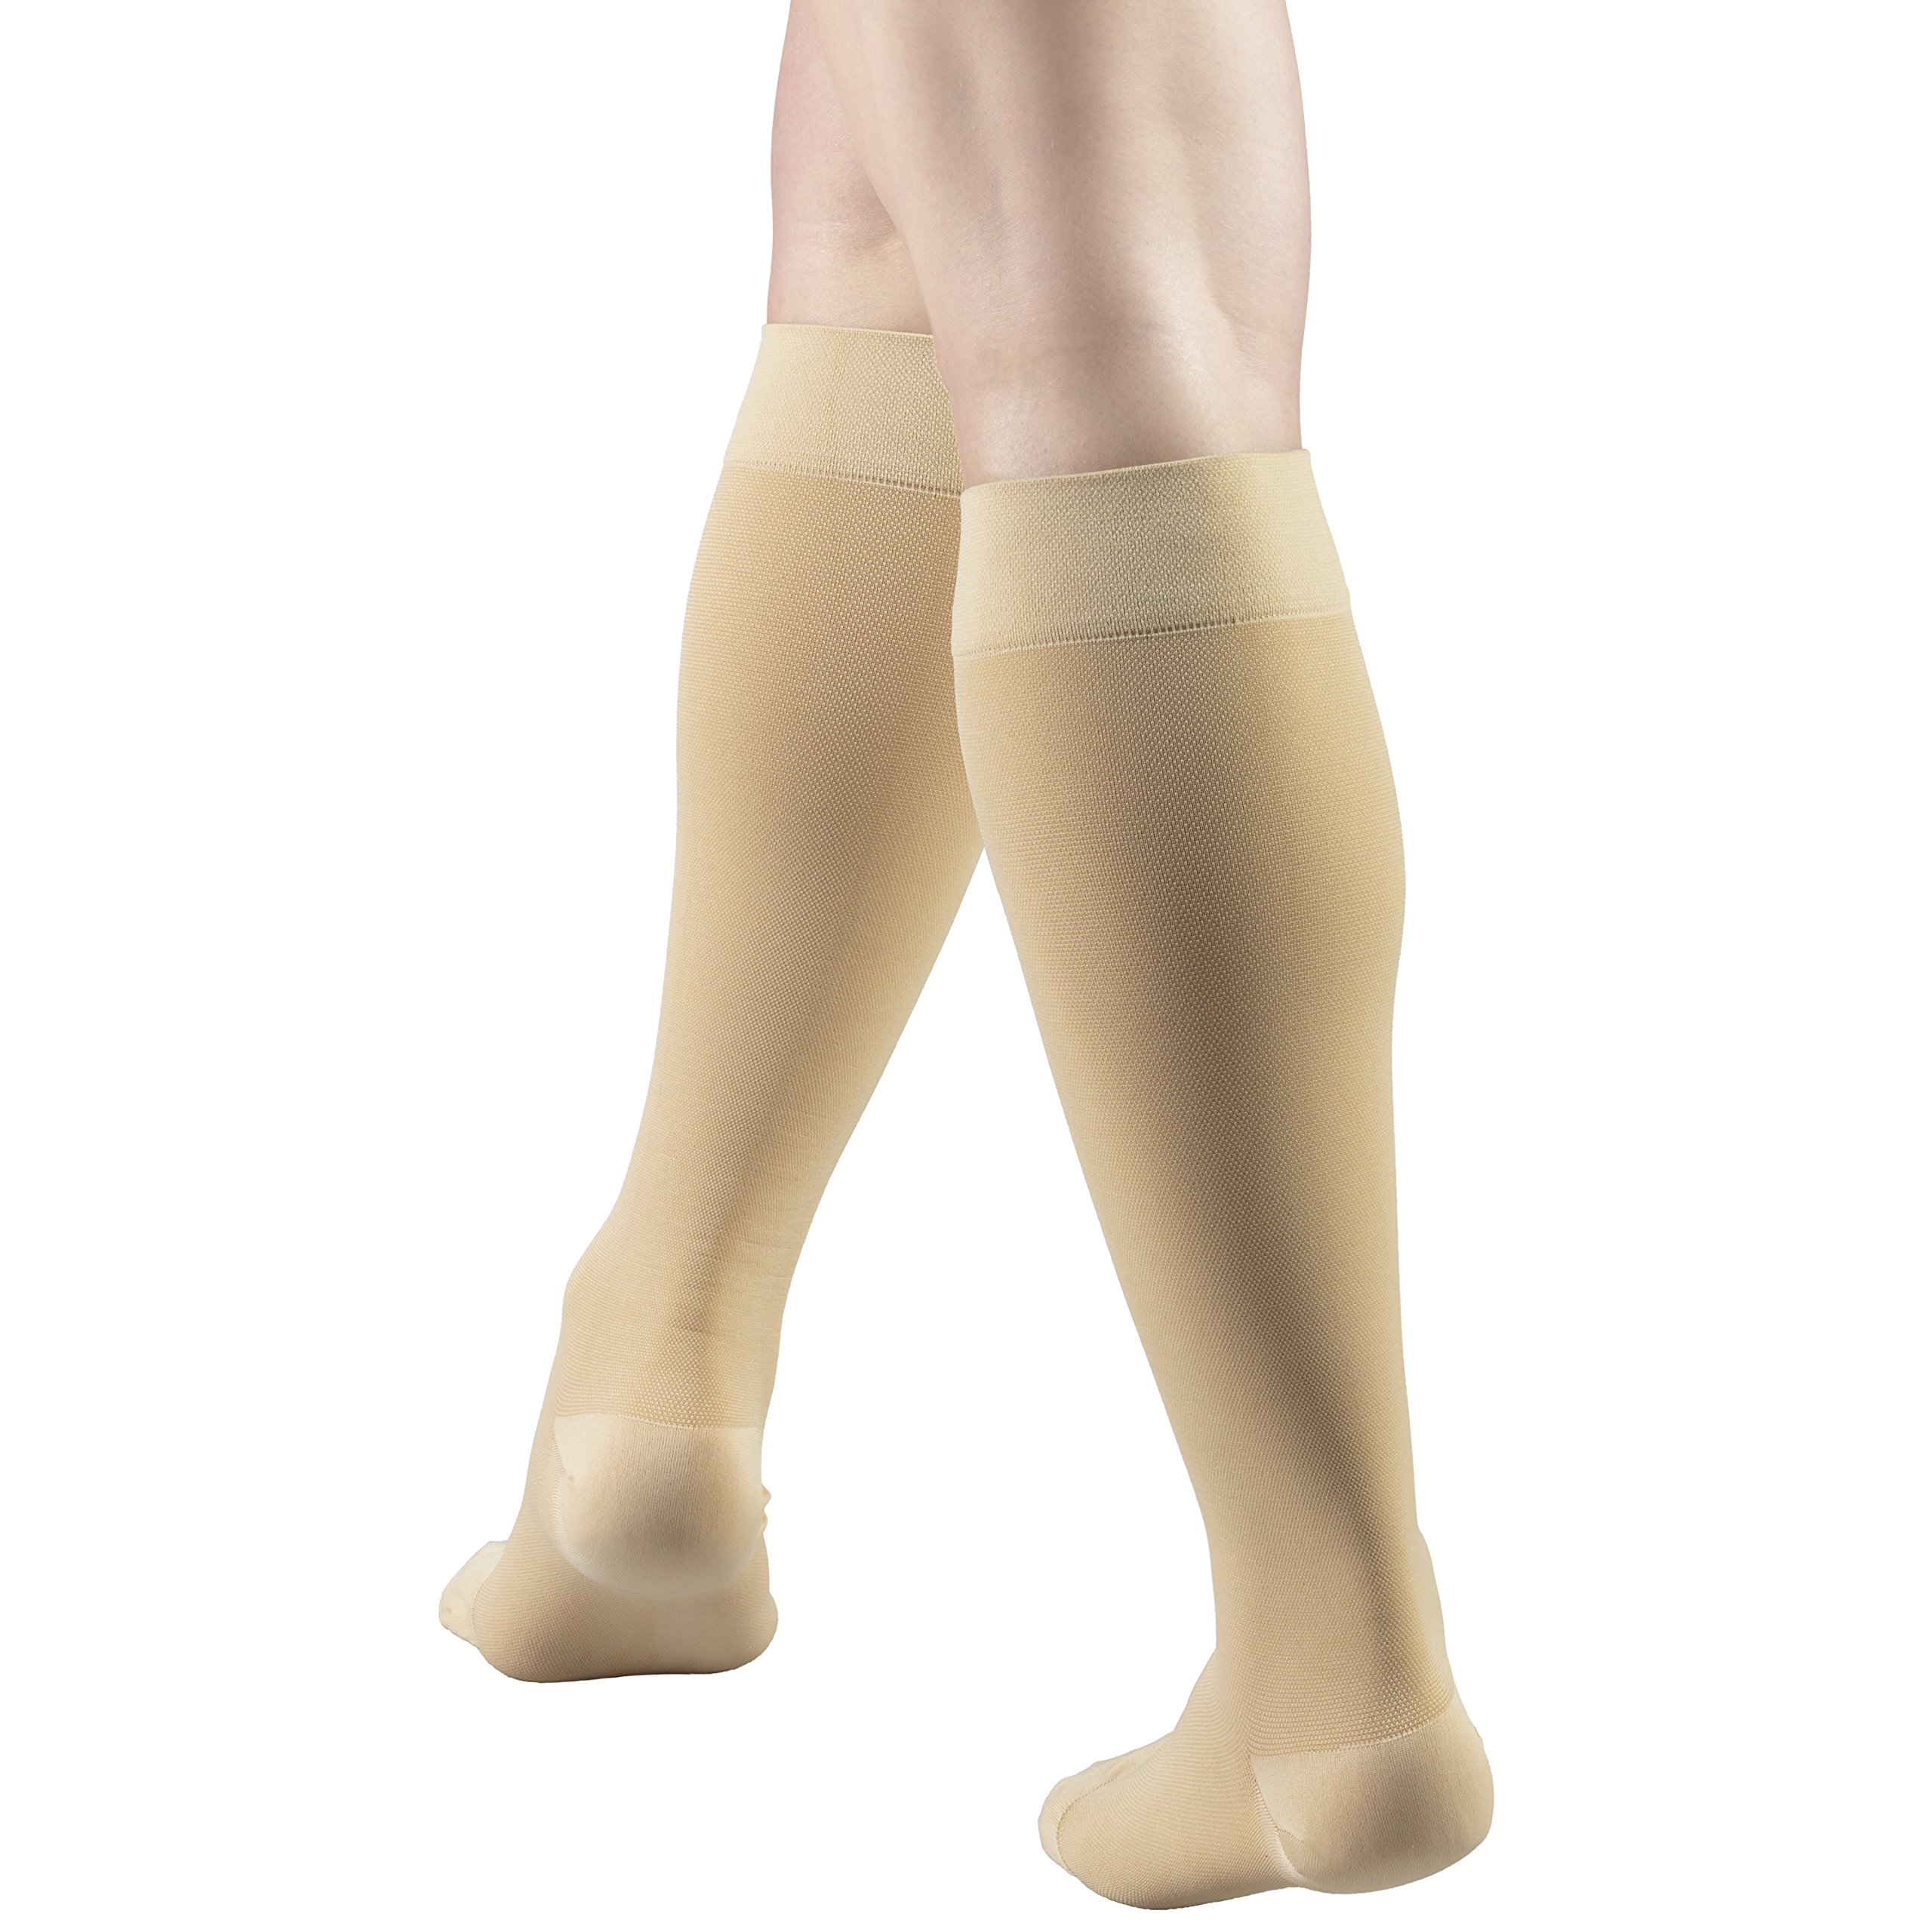 Truform 20-30 mmHg Compression Stockings for Men and Women, Knee High Length, Closed Toe, Beige, Medium